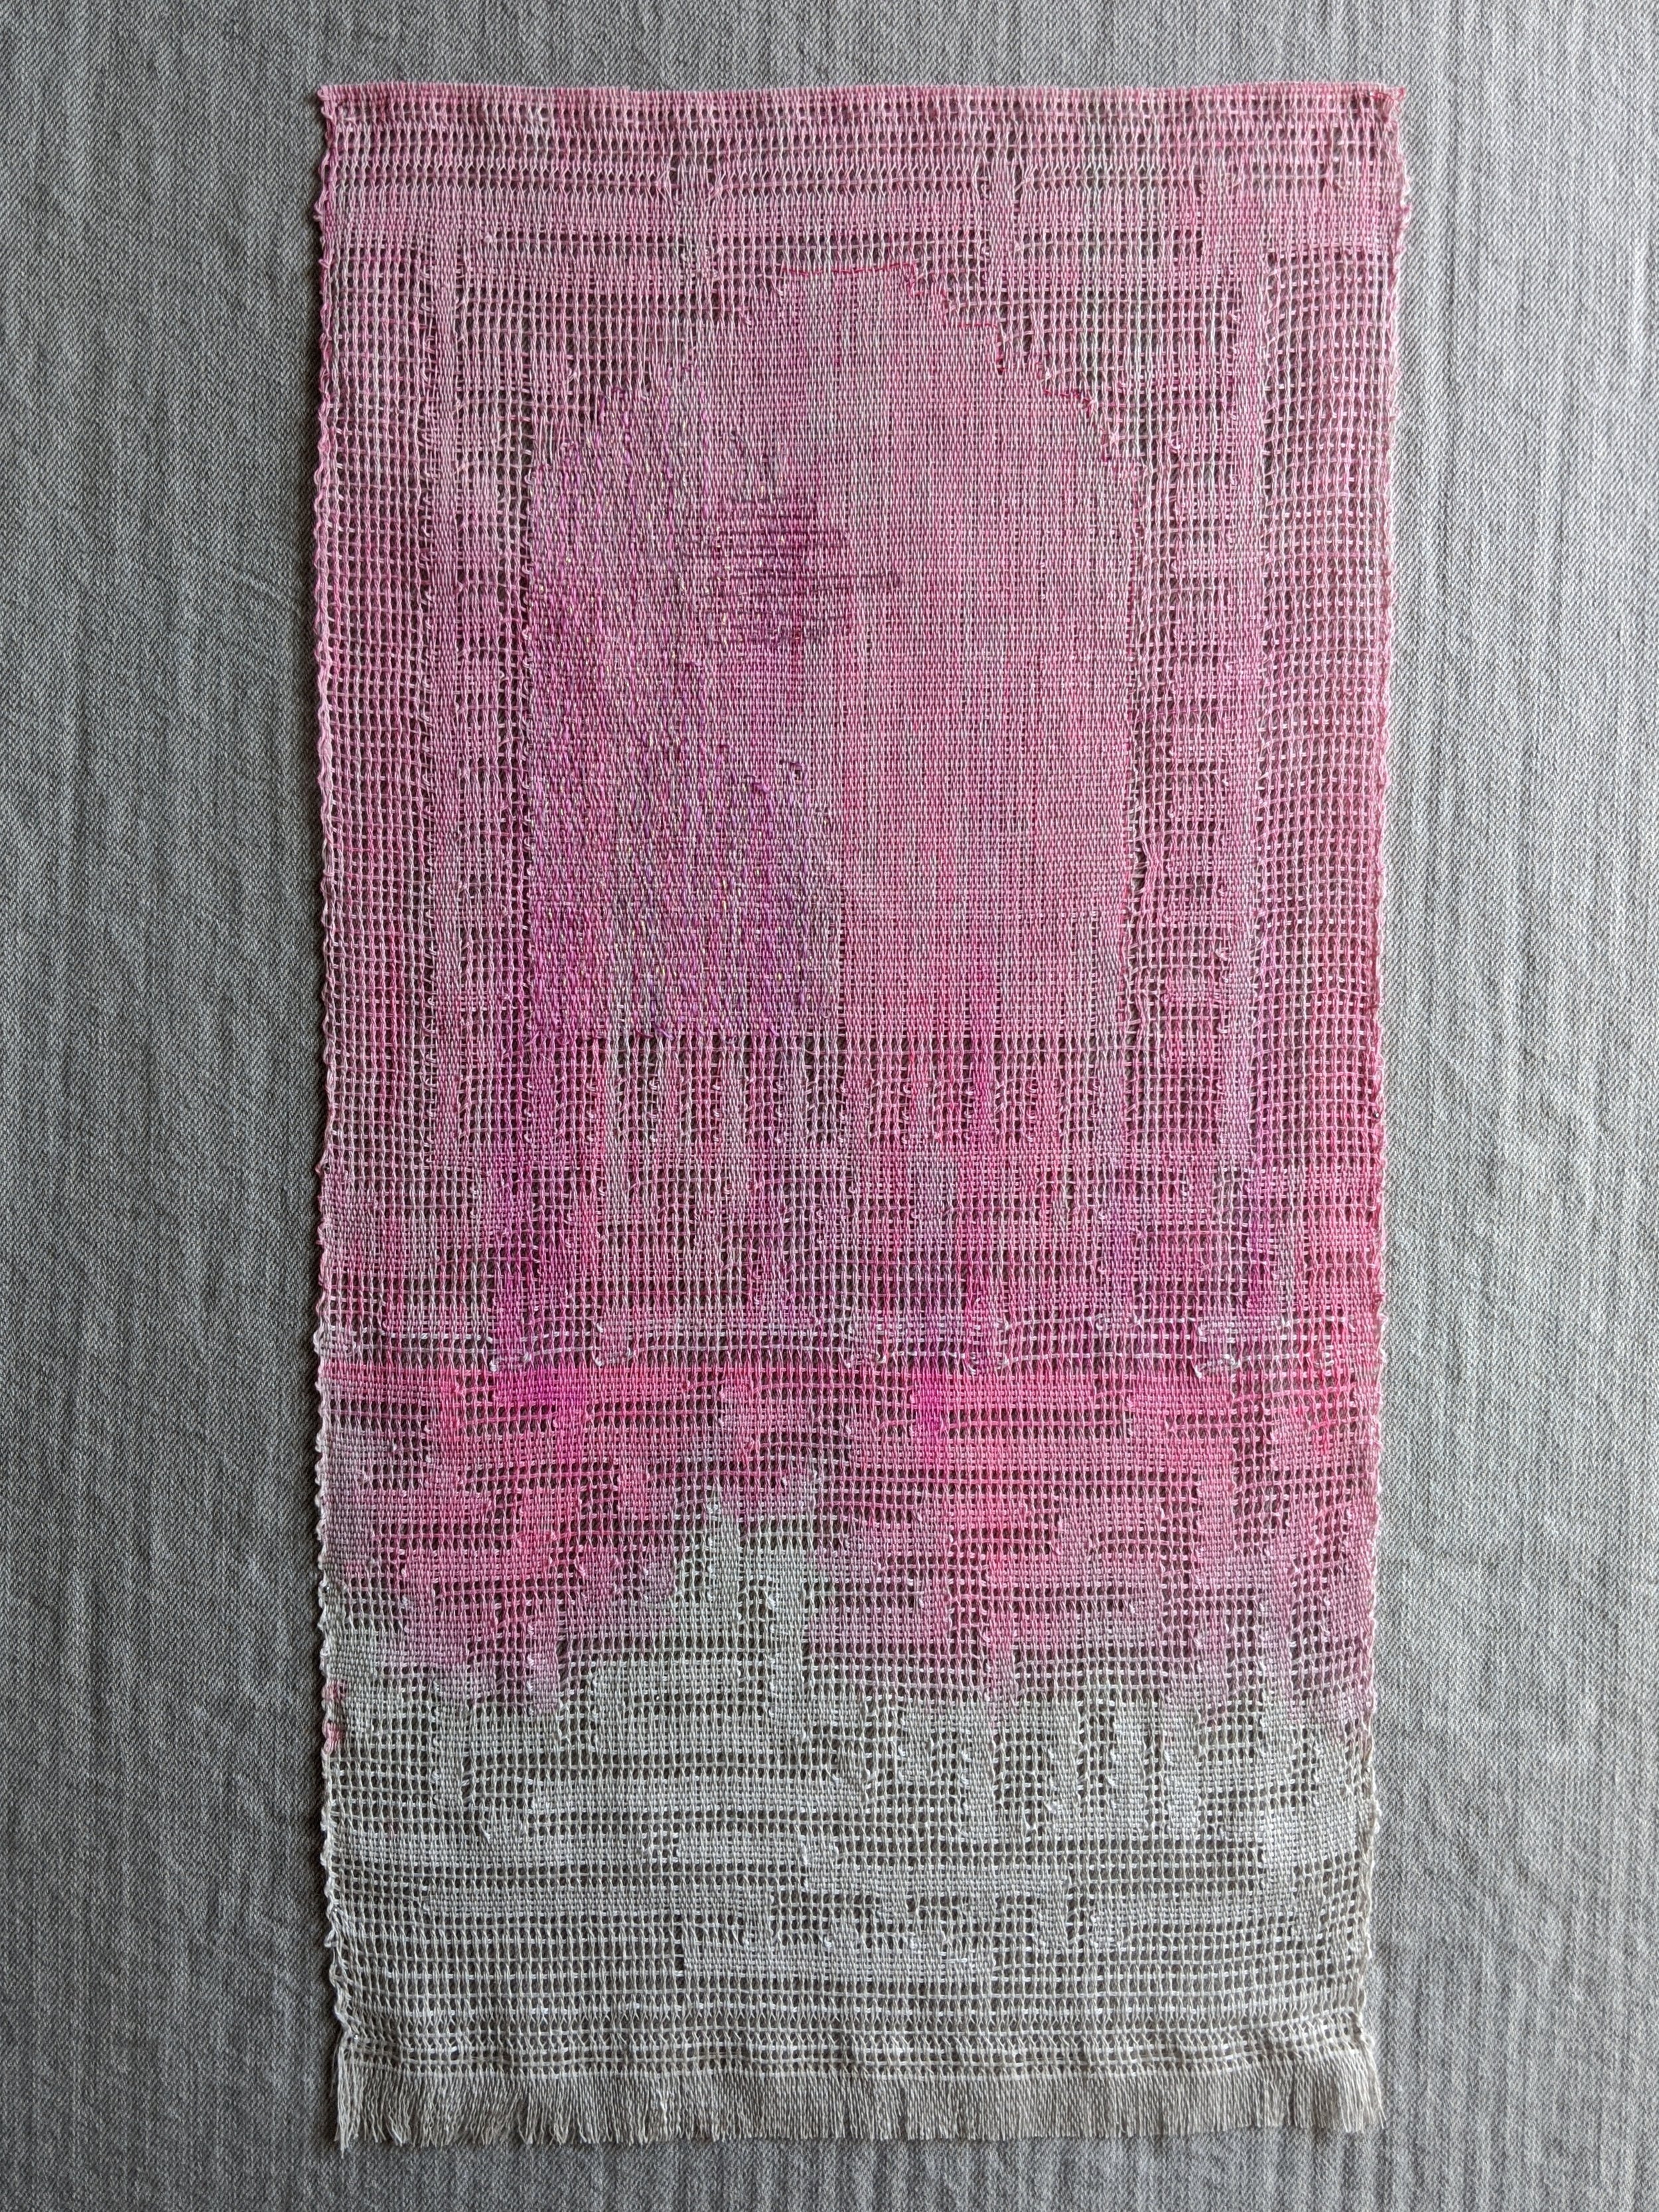  window/door/entrance/exit hand woven gauze; cotton, watercolor, iridescent embroidery thread  19 in x 10 in 2020  